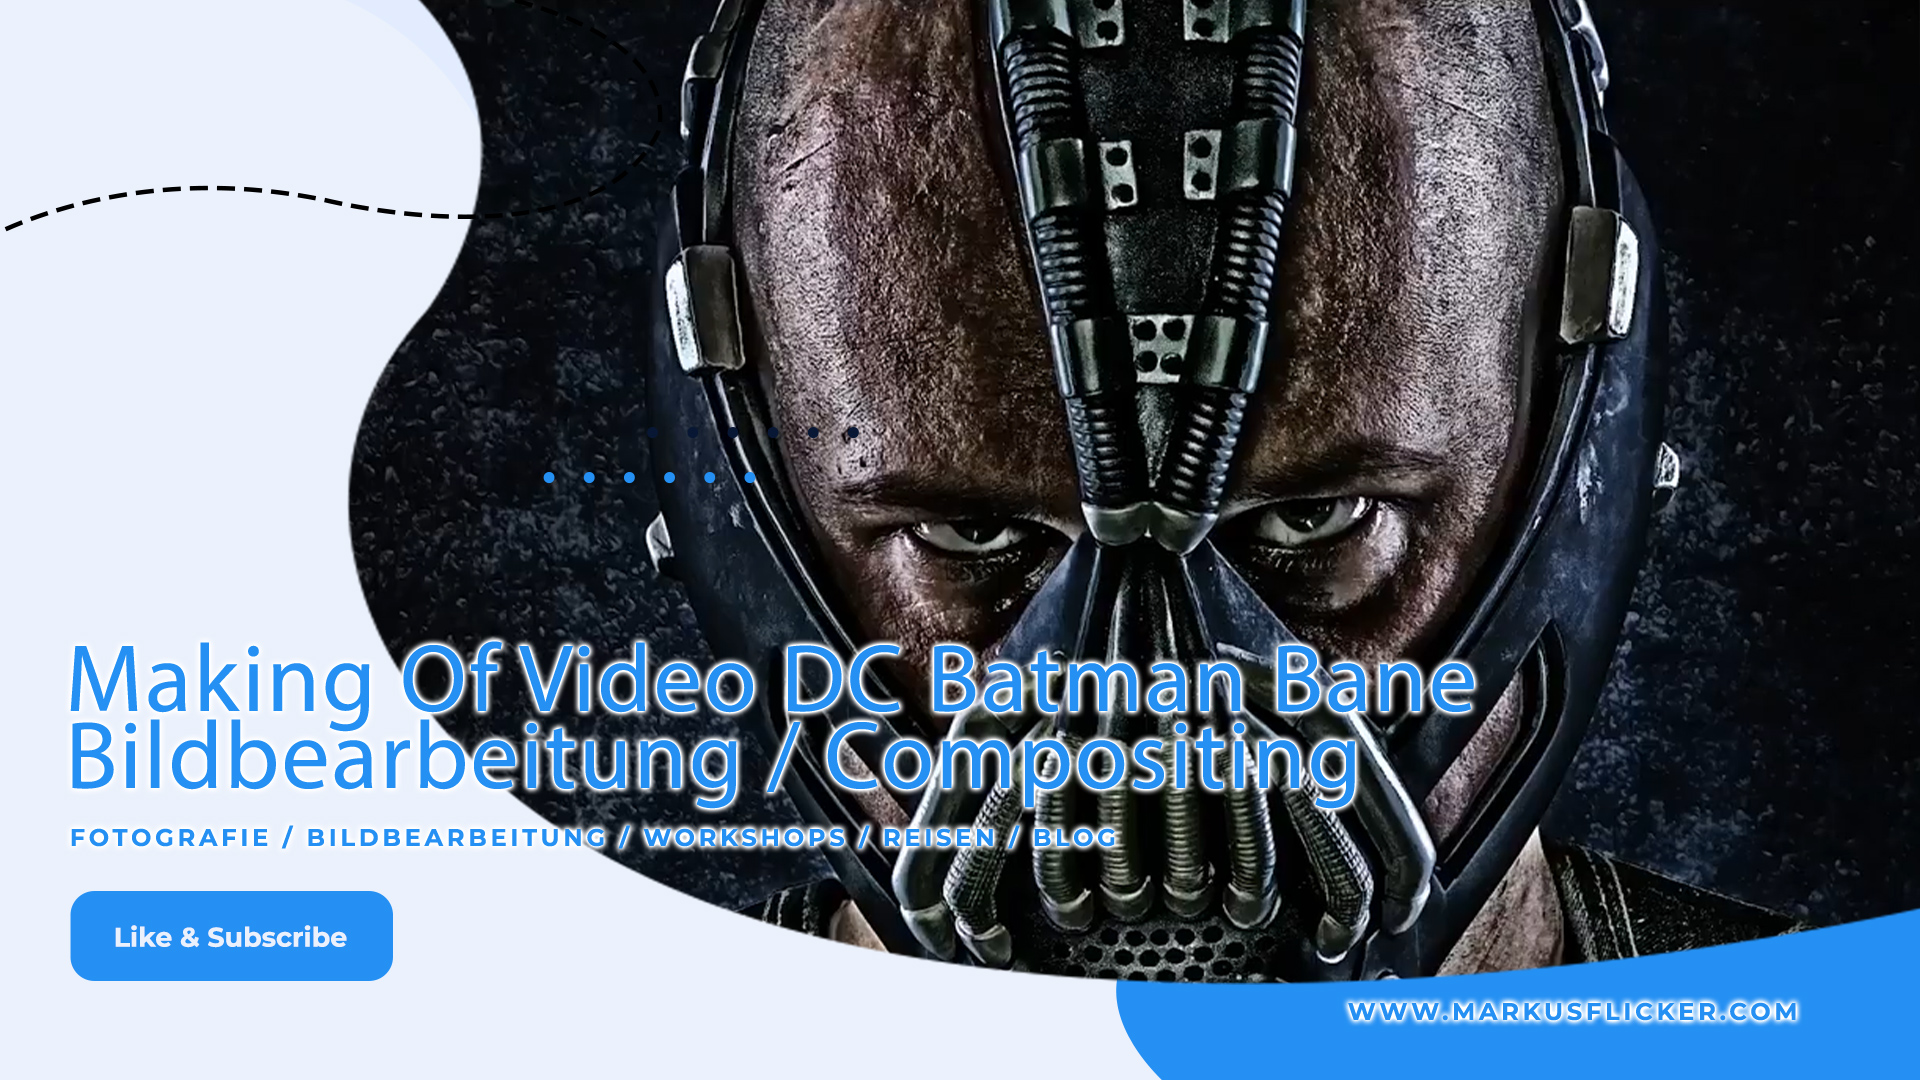 Making Of Video DC Batman Bane Bildbearbeitung Compositing Adobe Photoshop